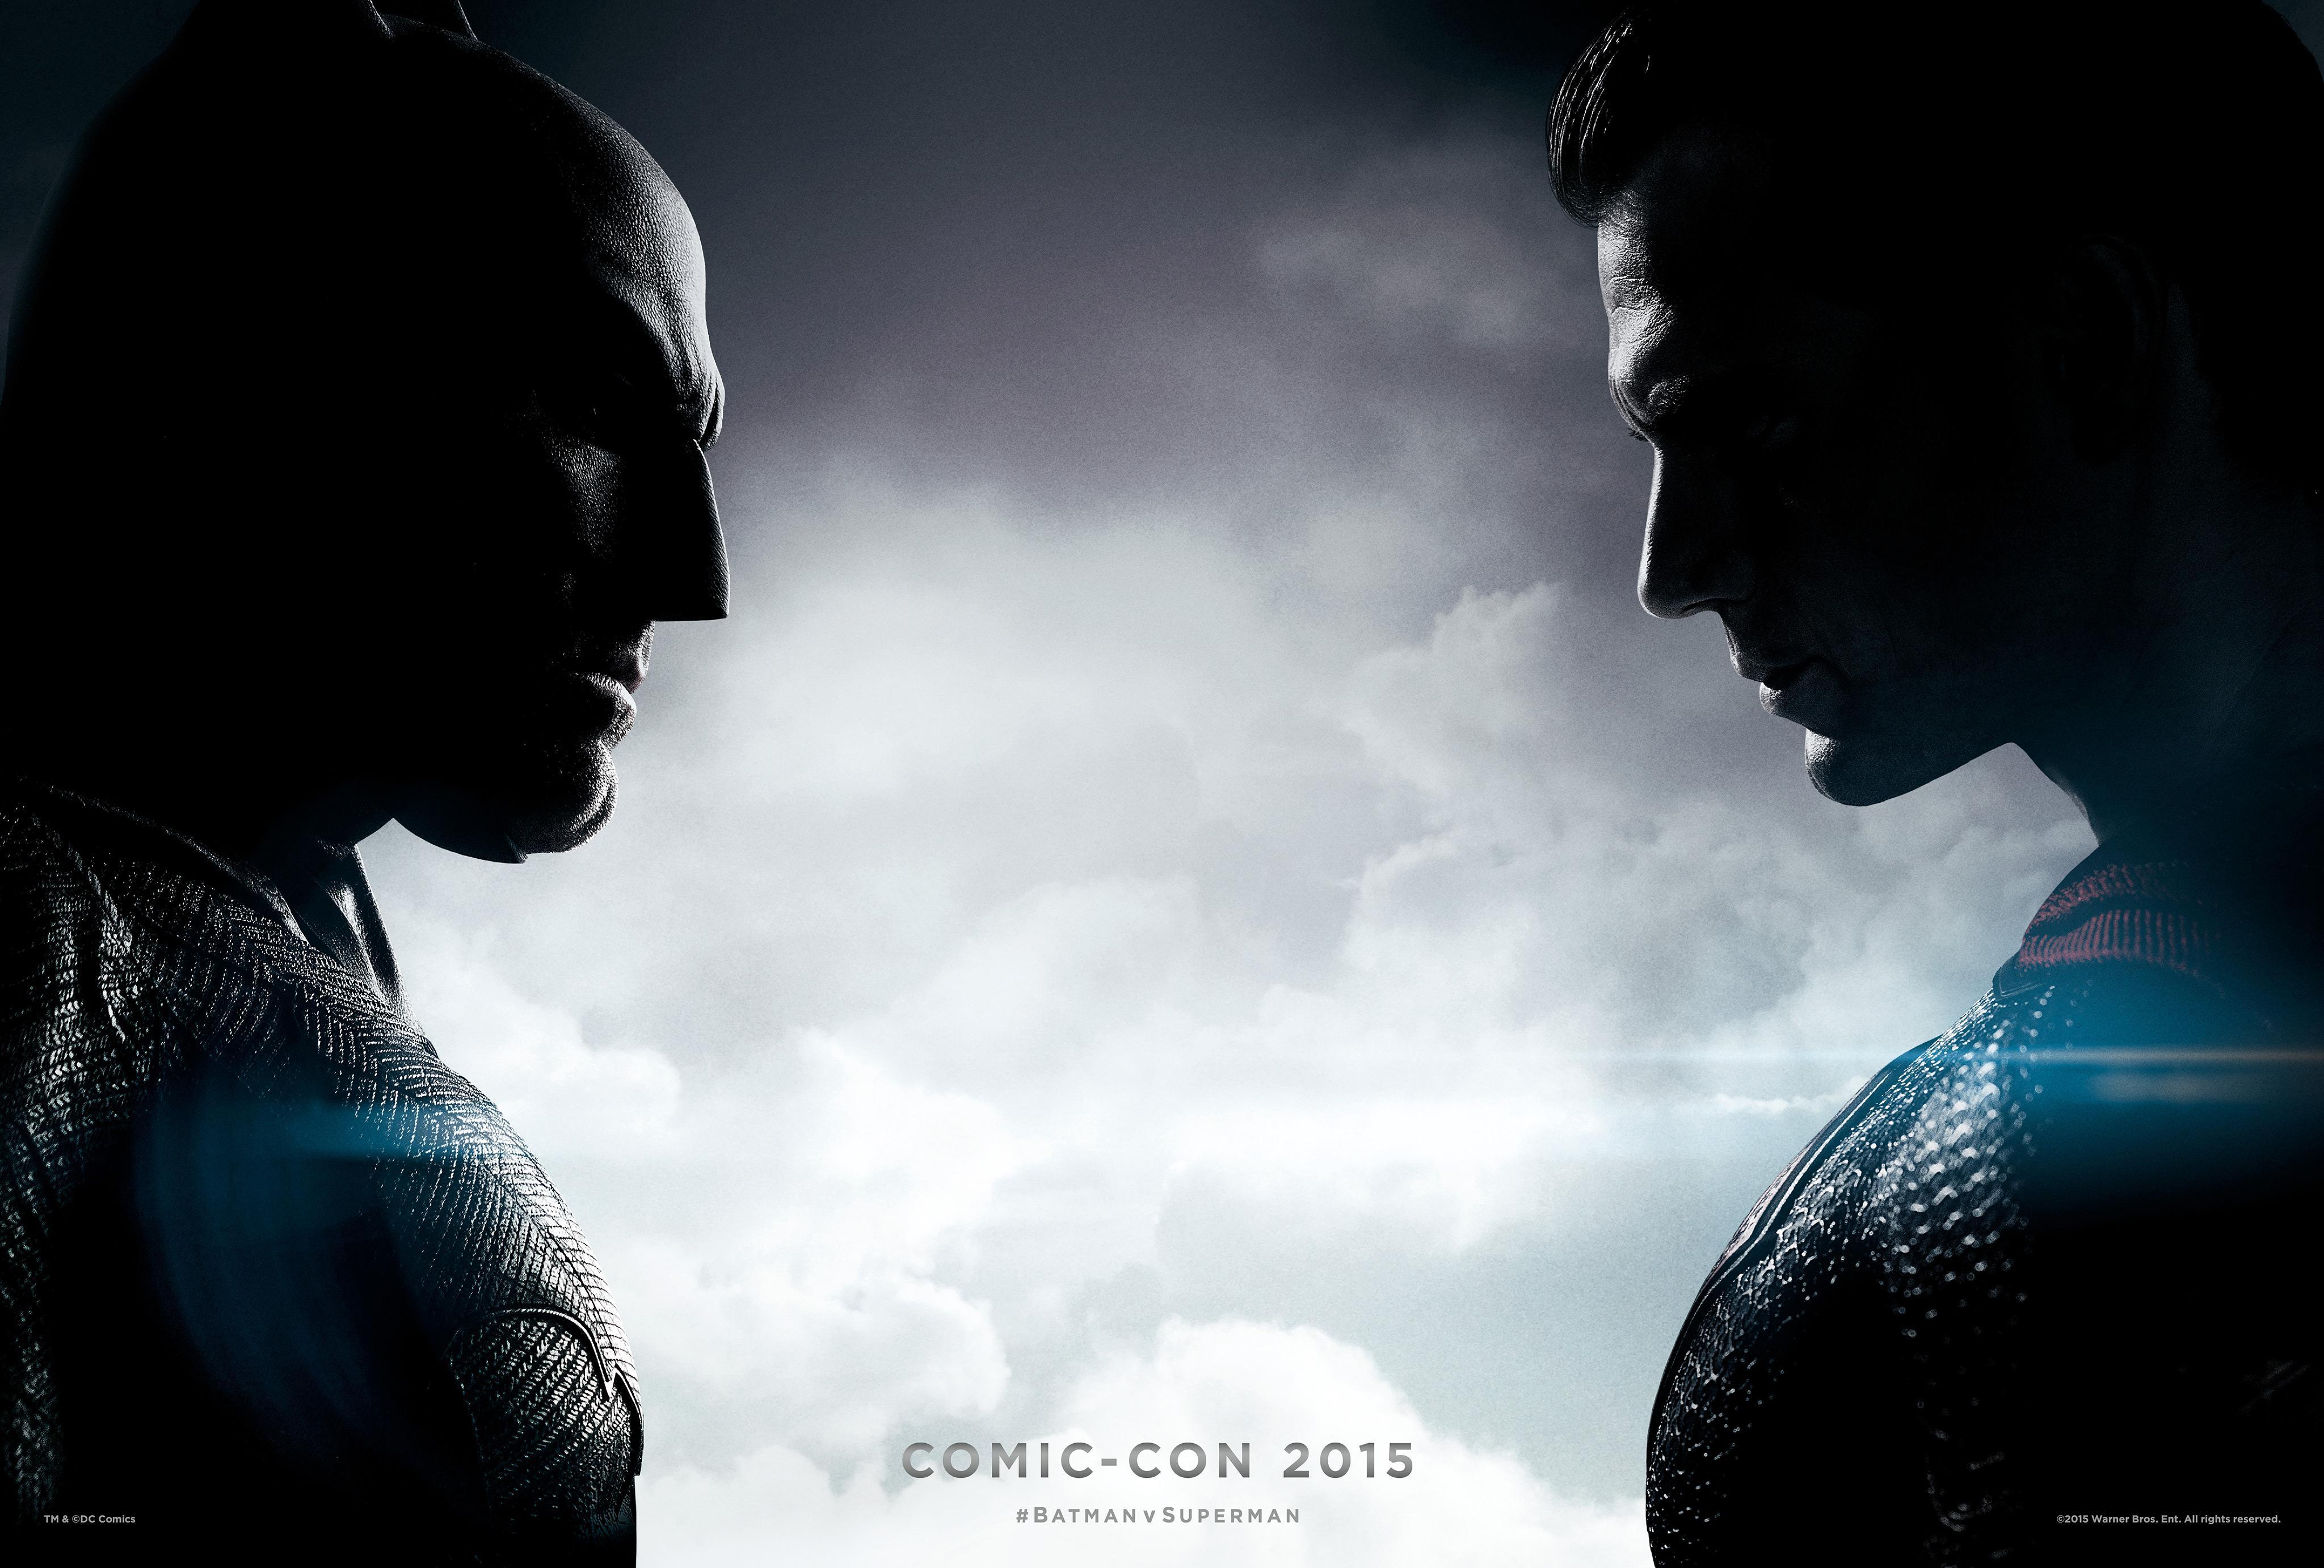 It’s (bat) man vs. god in new ‘Batman v Superman’ trailer